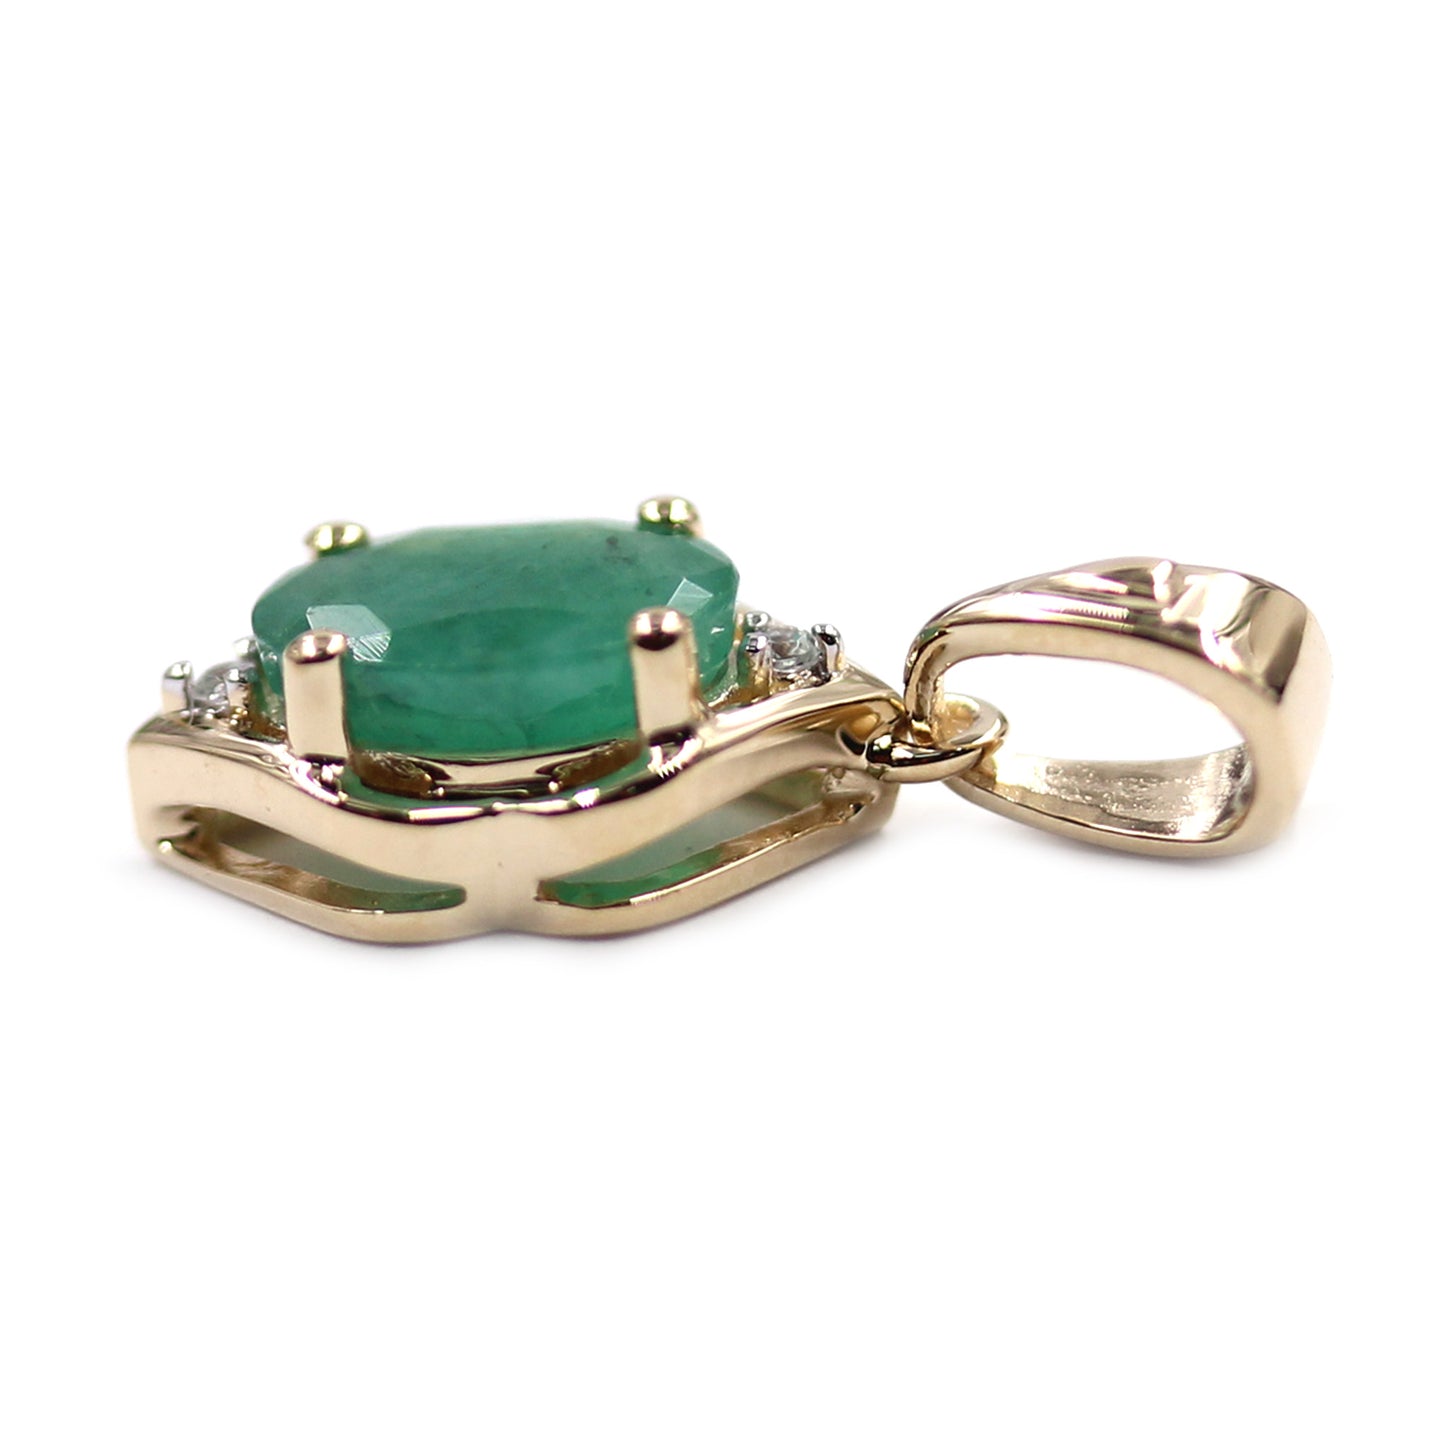 10k Yellow Gold Emerald, Diamond Pendant Necklace, 18"+2" Extender - Pinctore